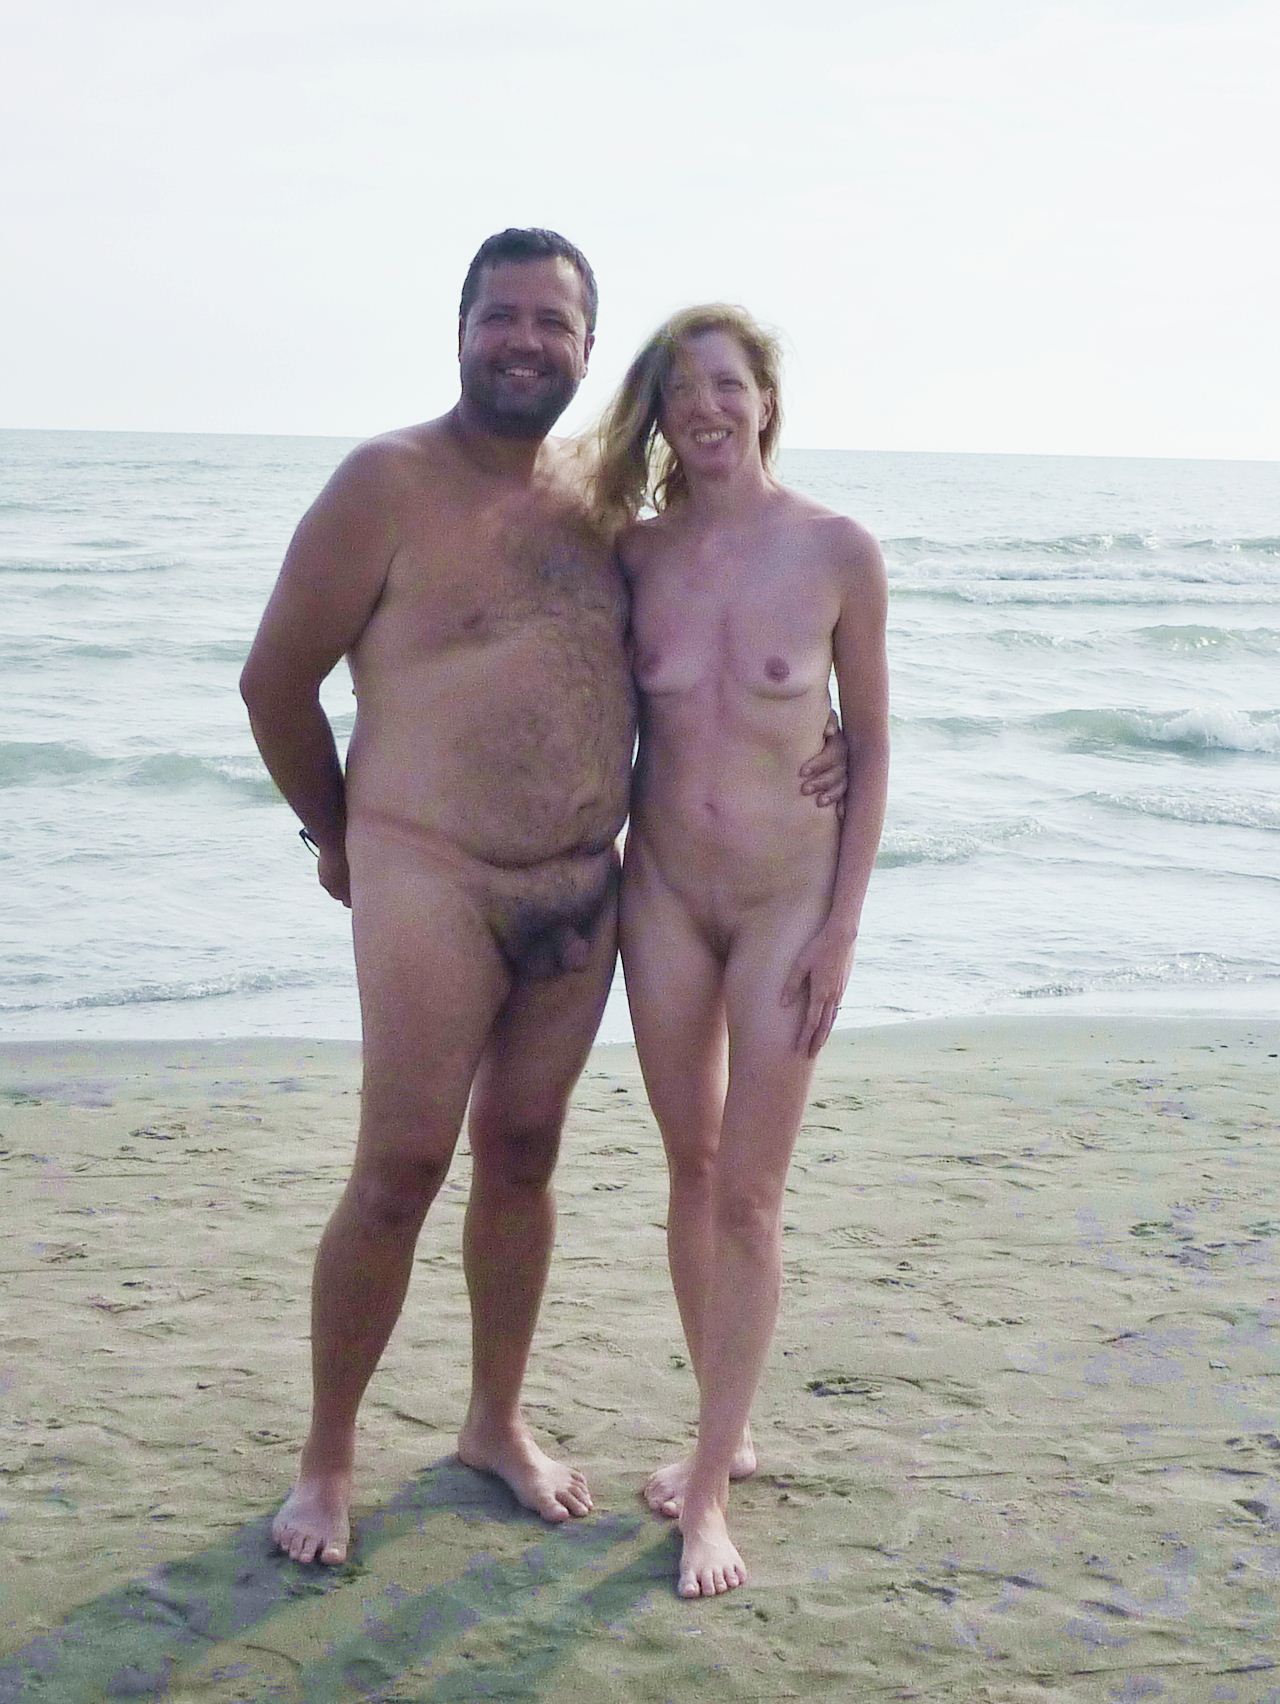 https://www.nudismlife.com/galleries/nudists_and_nude/nudists_couple/nudists_nude_naturists_couple_1488.jpg